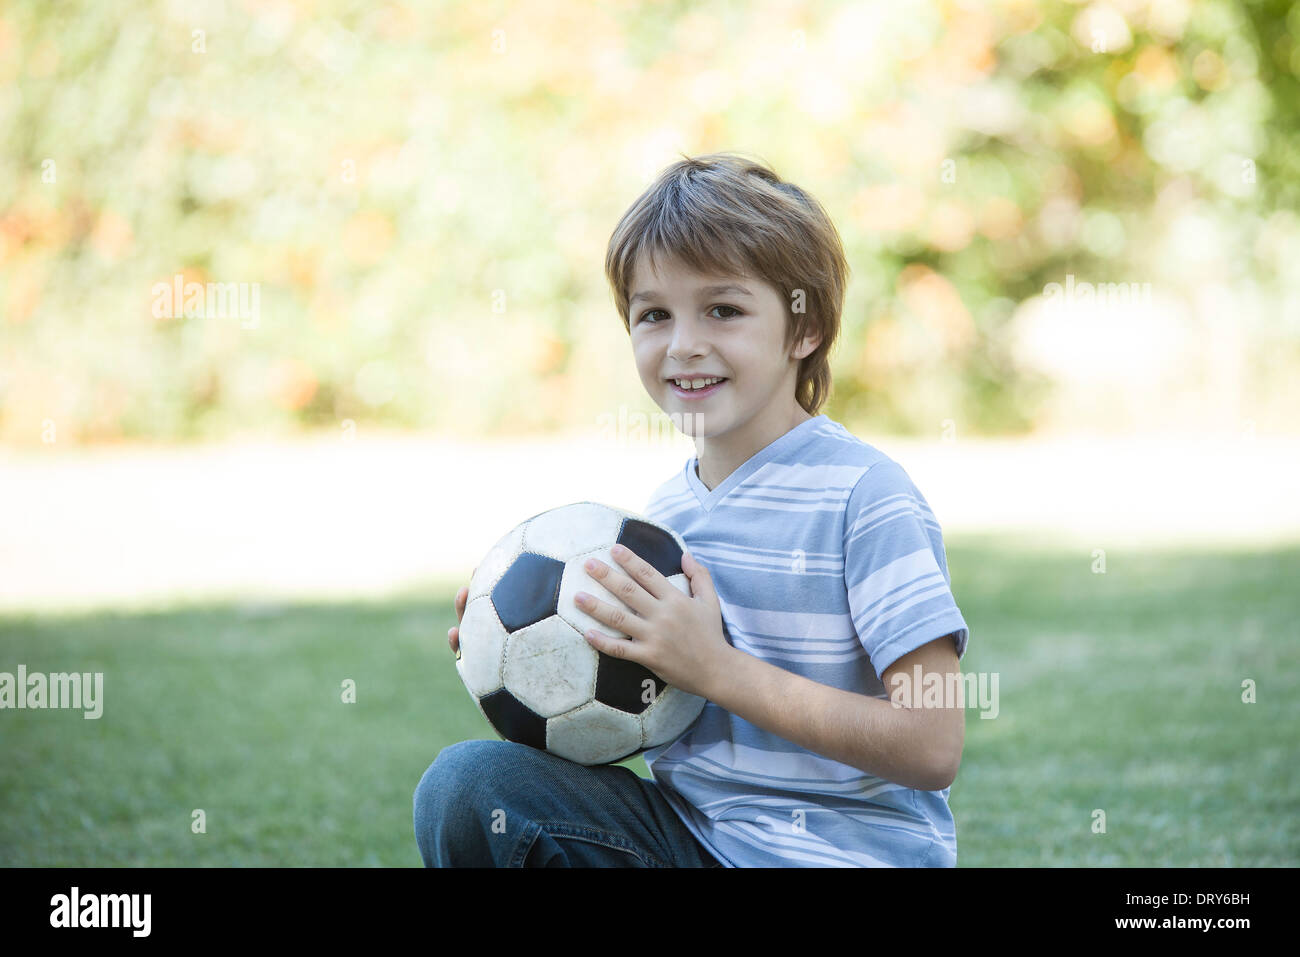 Boy holding soccer ball, portrait Stock Photo